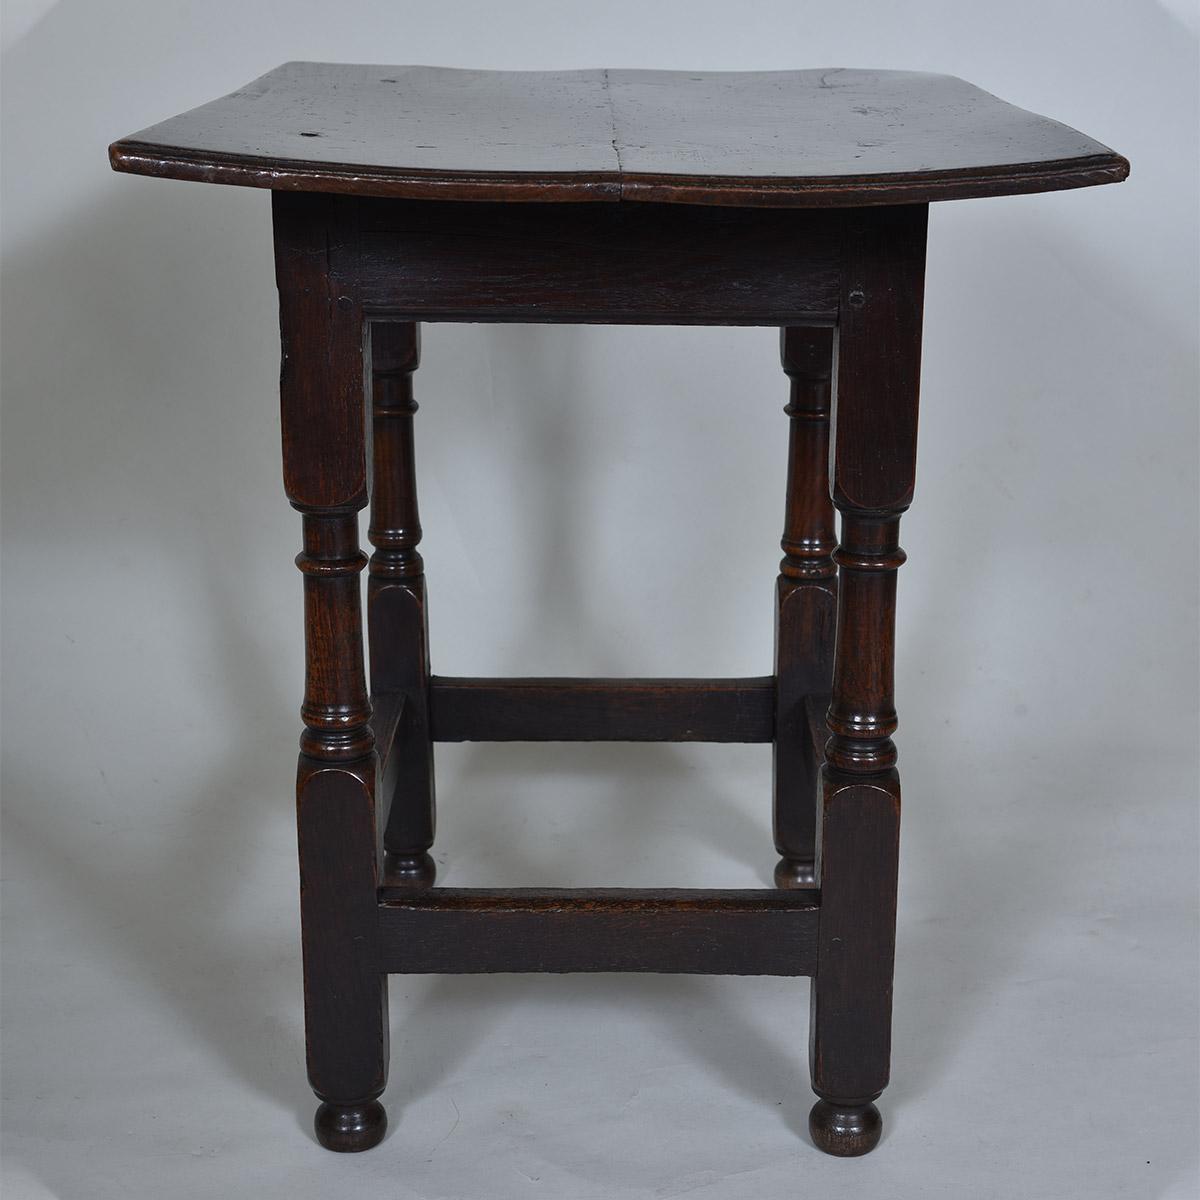 Small 17th century Oak Table